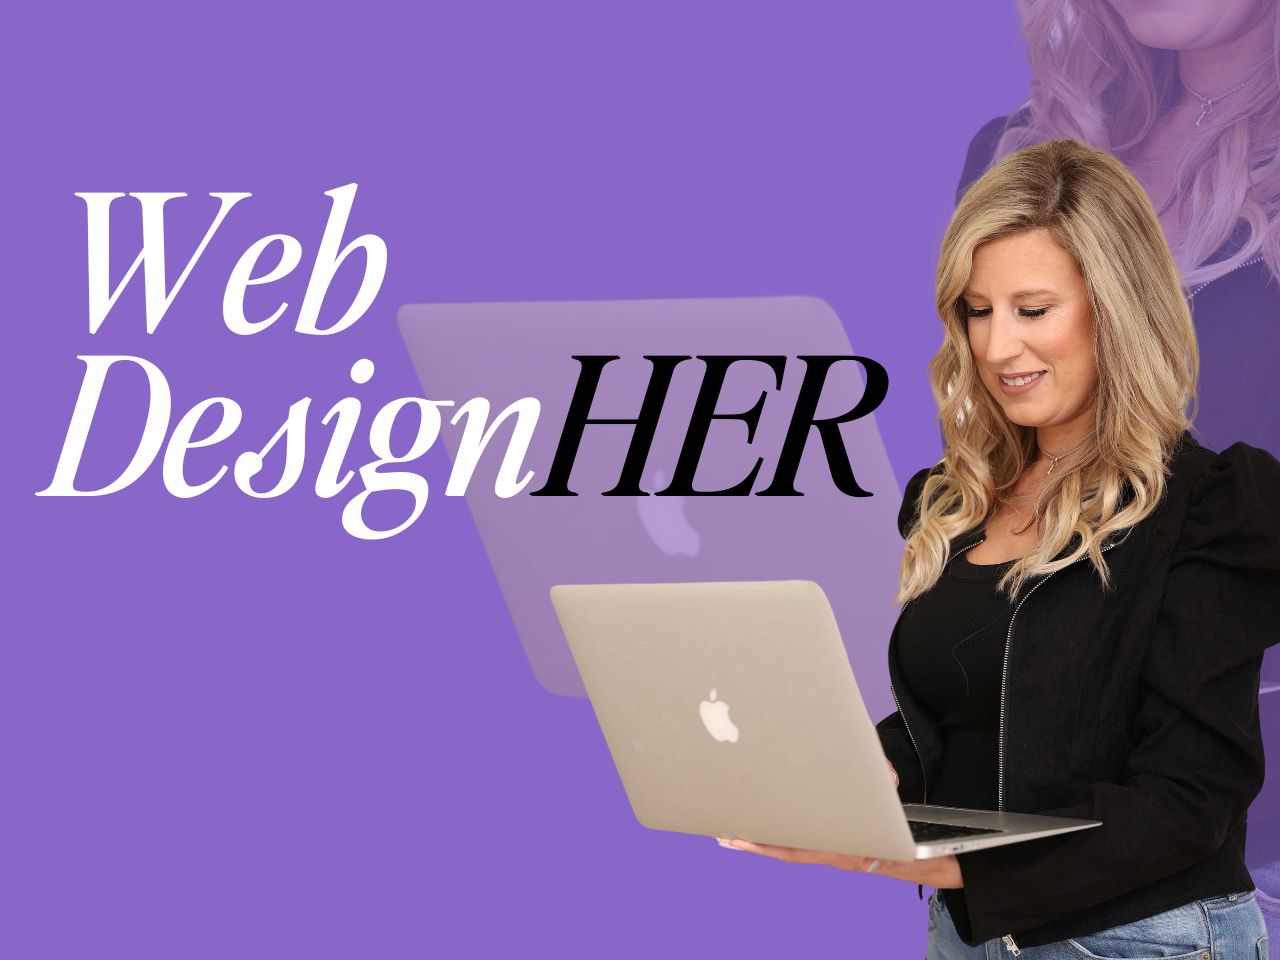 Web Design Courses- Web DesignHER